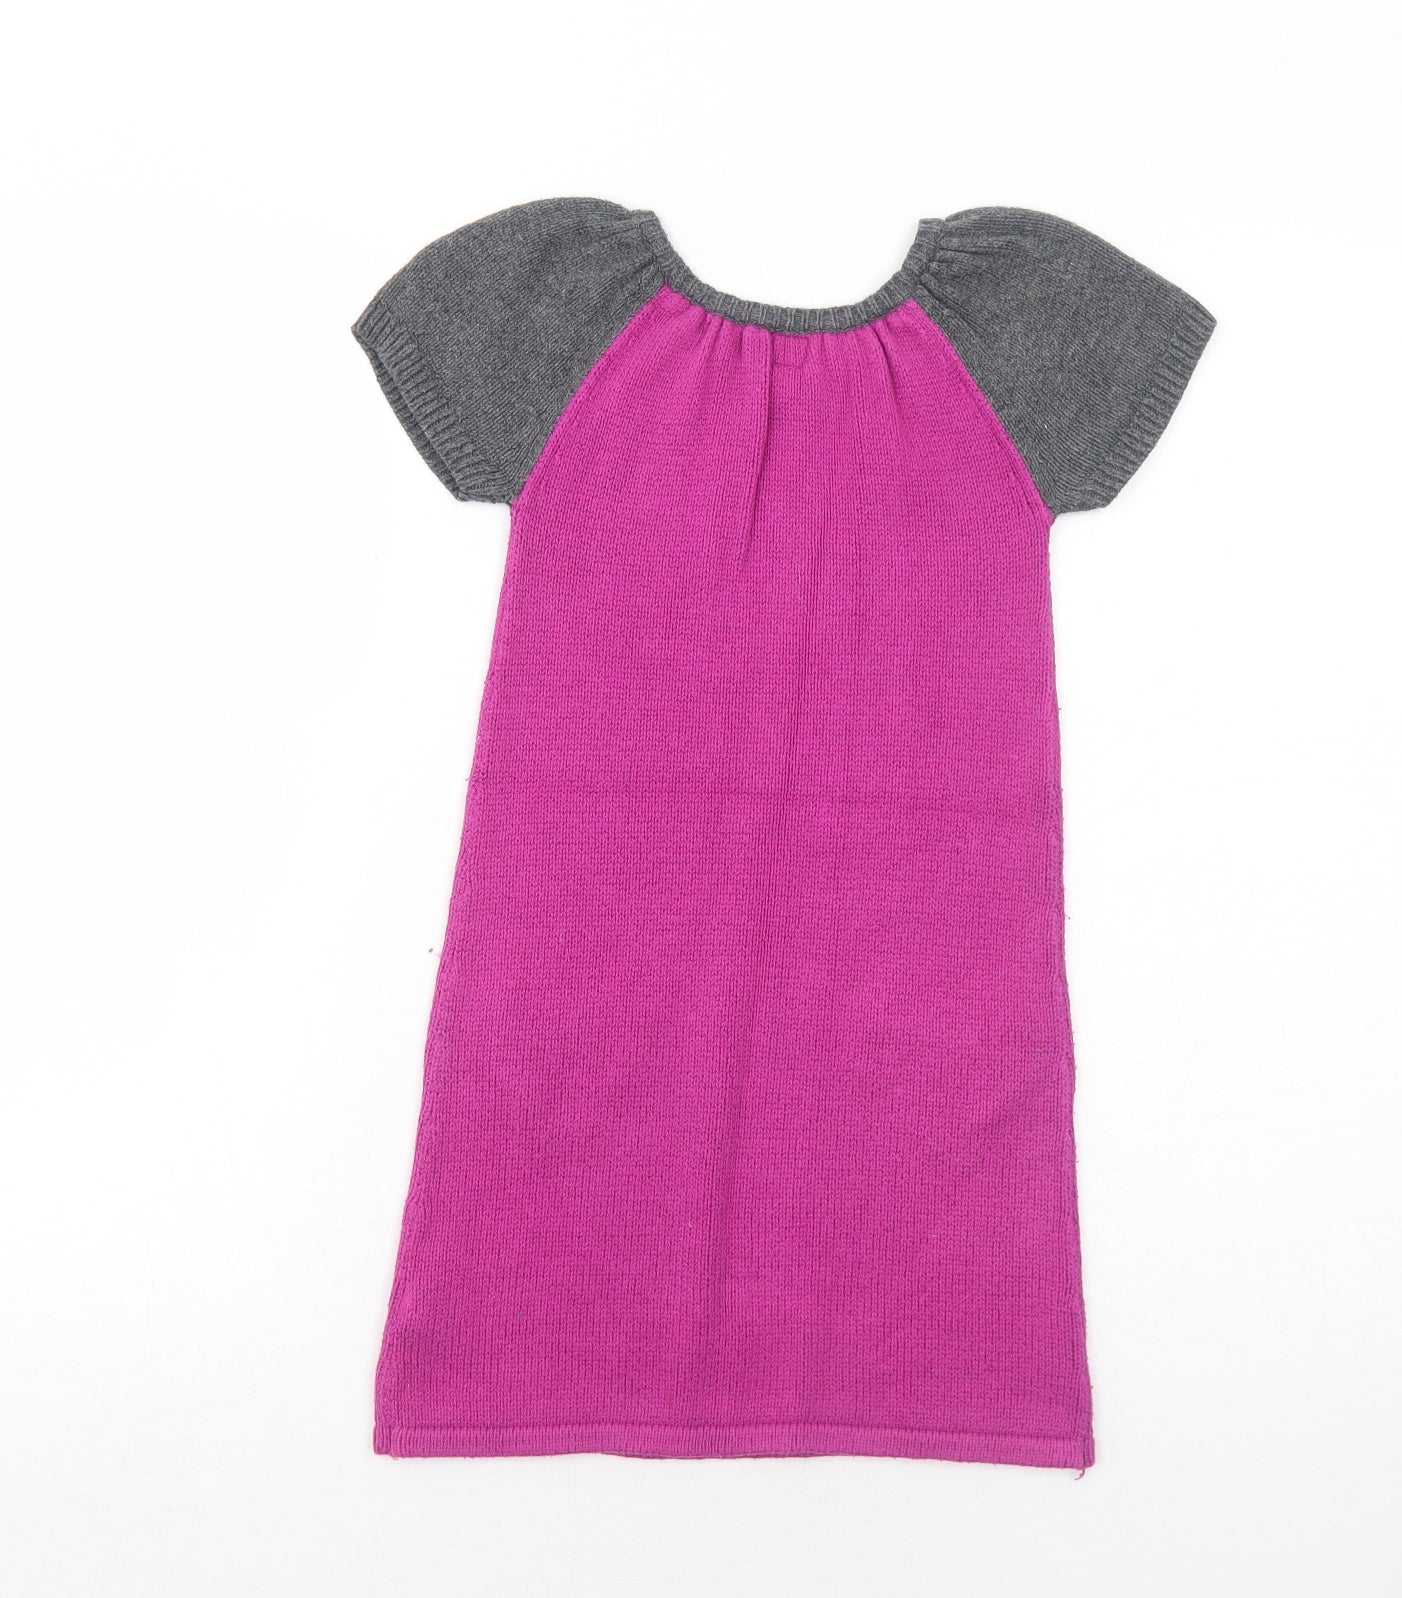 Gap Girls Purple Colourblock Cotton Jumper Dress Size 5 Years Boat Neck Pullover - Knit Pockets